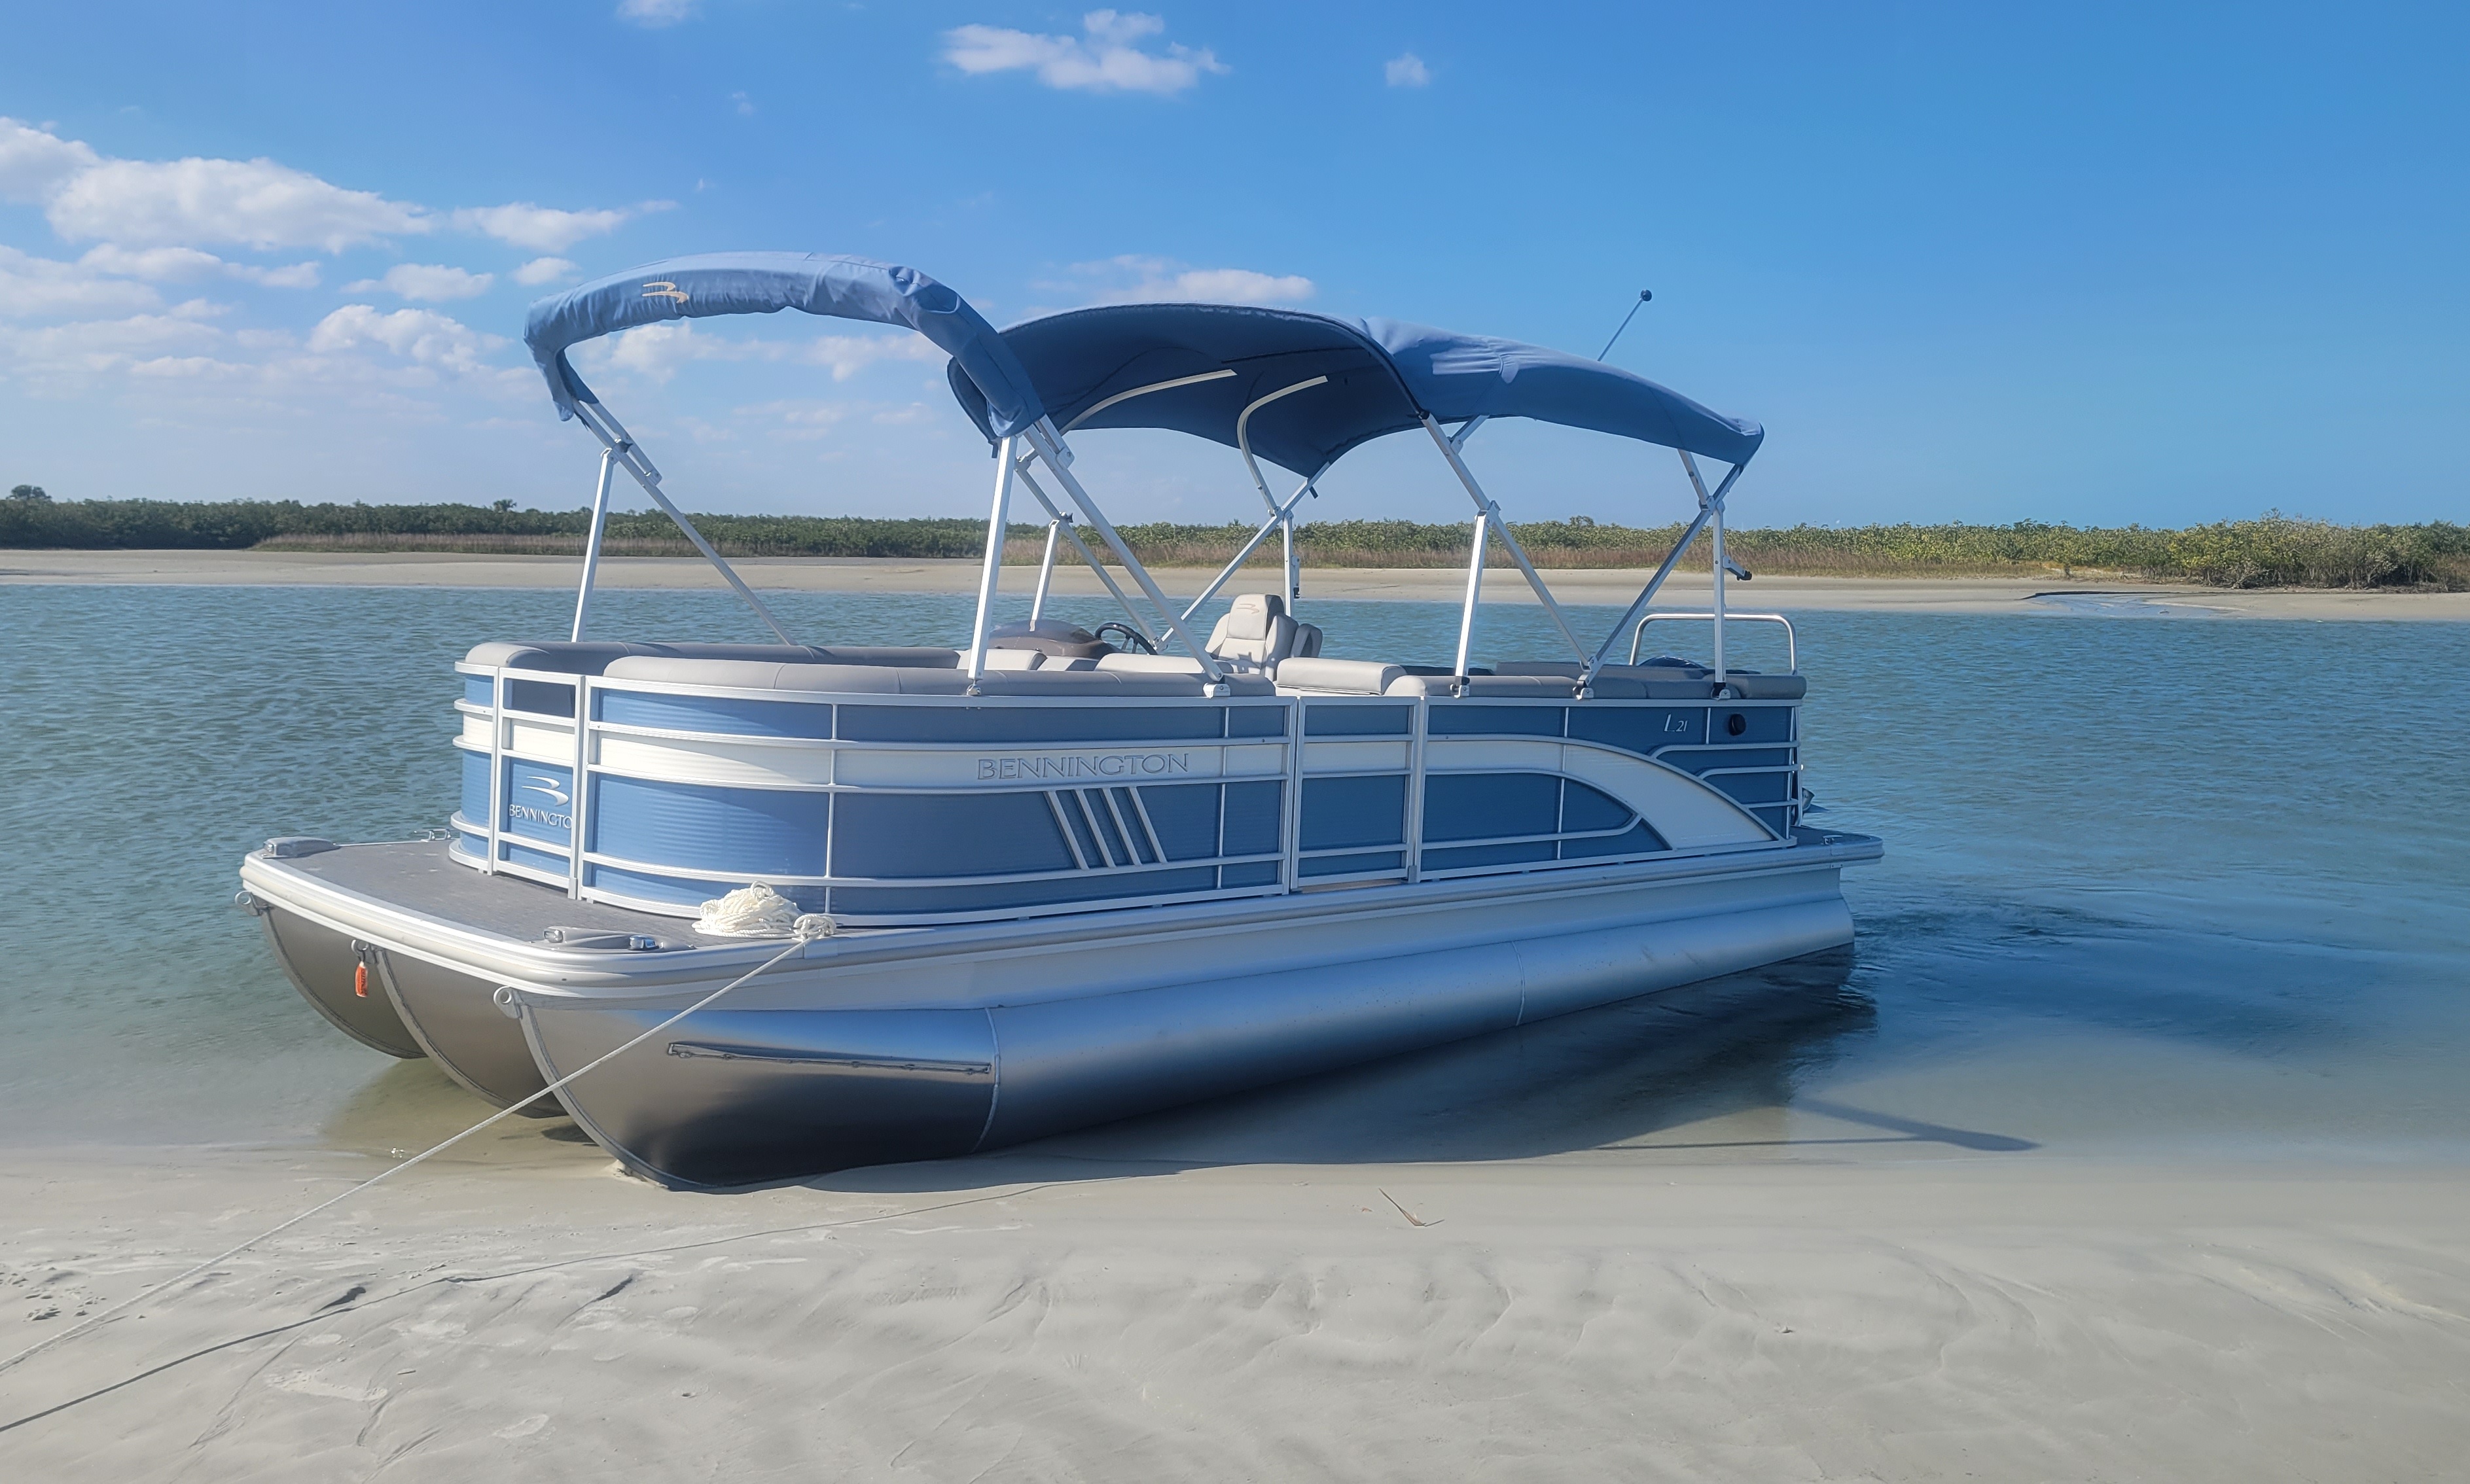 Daytona Beach Boat Rentals From $80/Hour GetMyBoat image